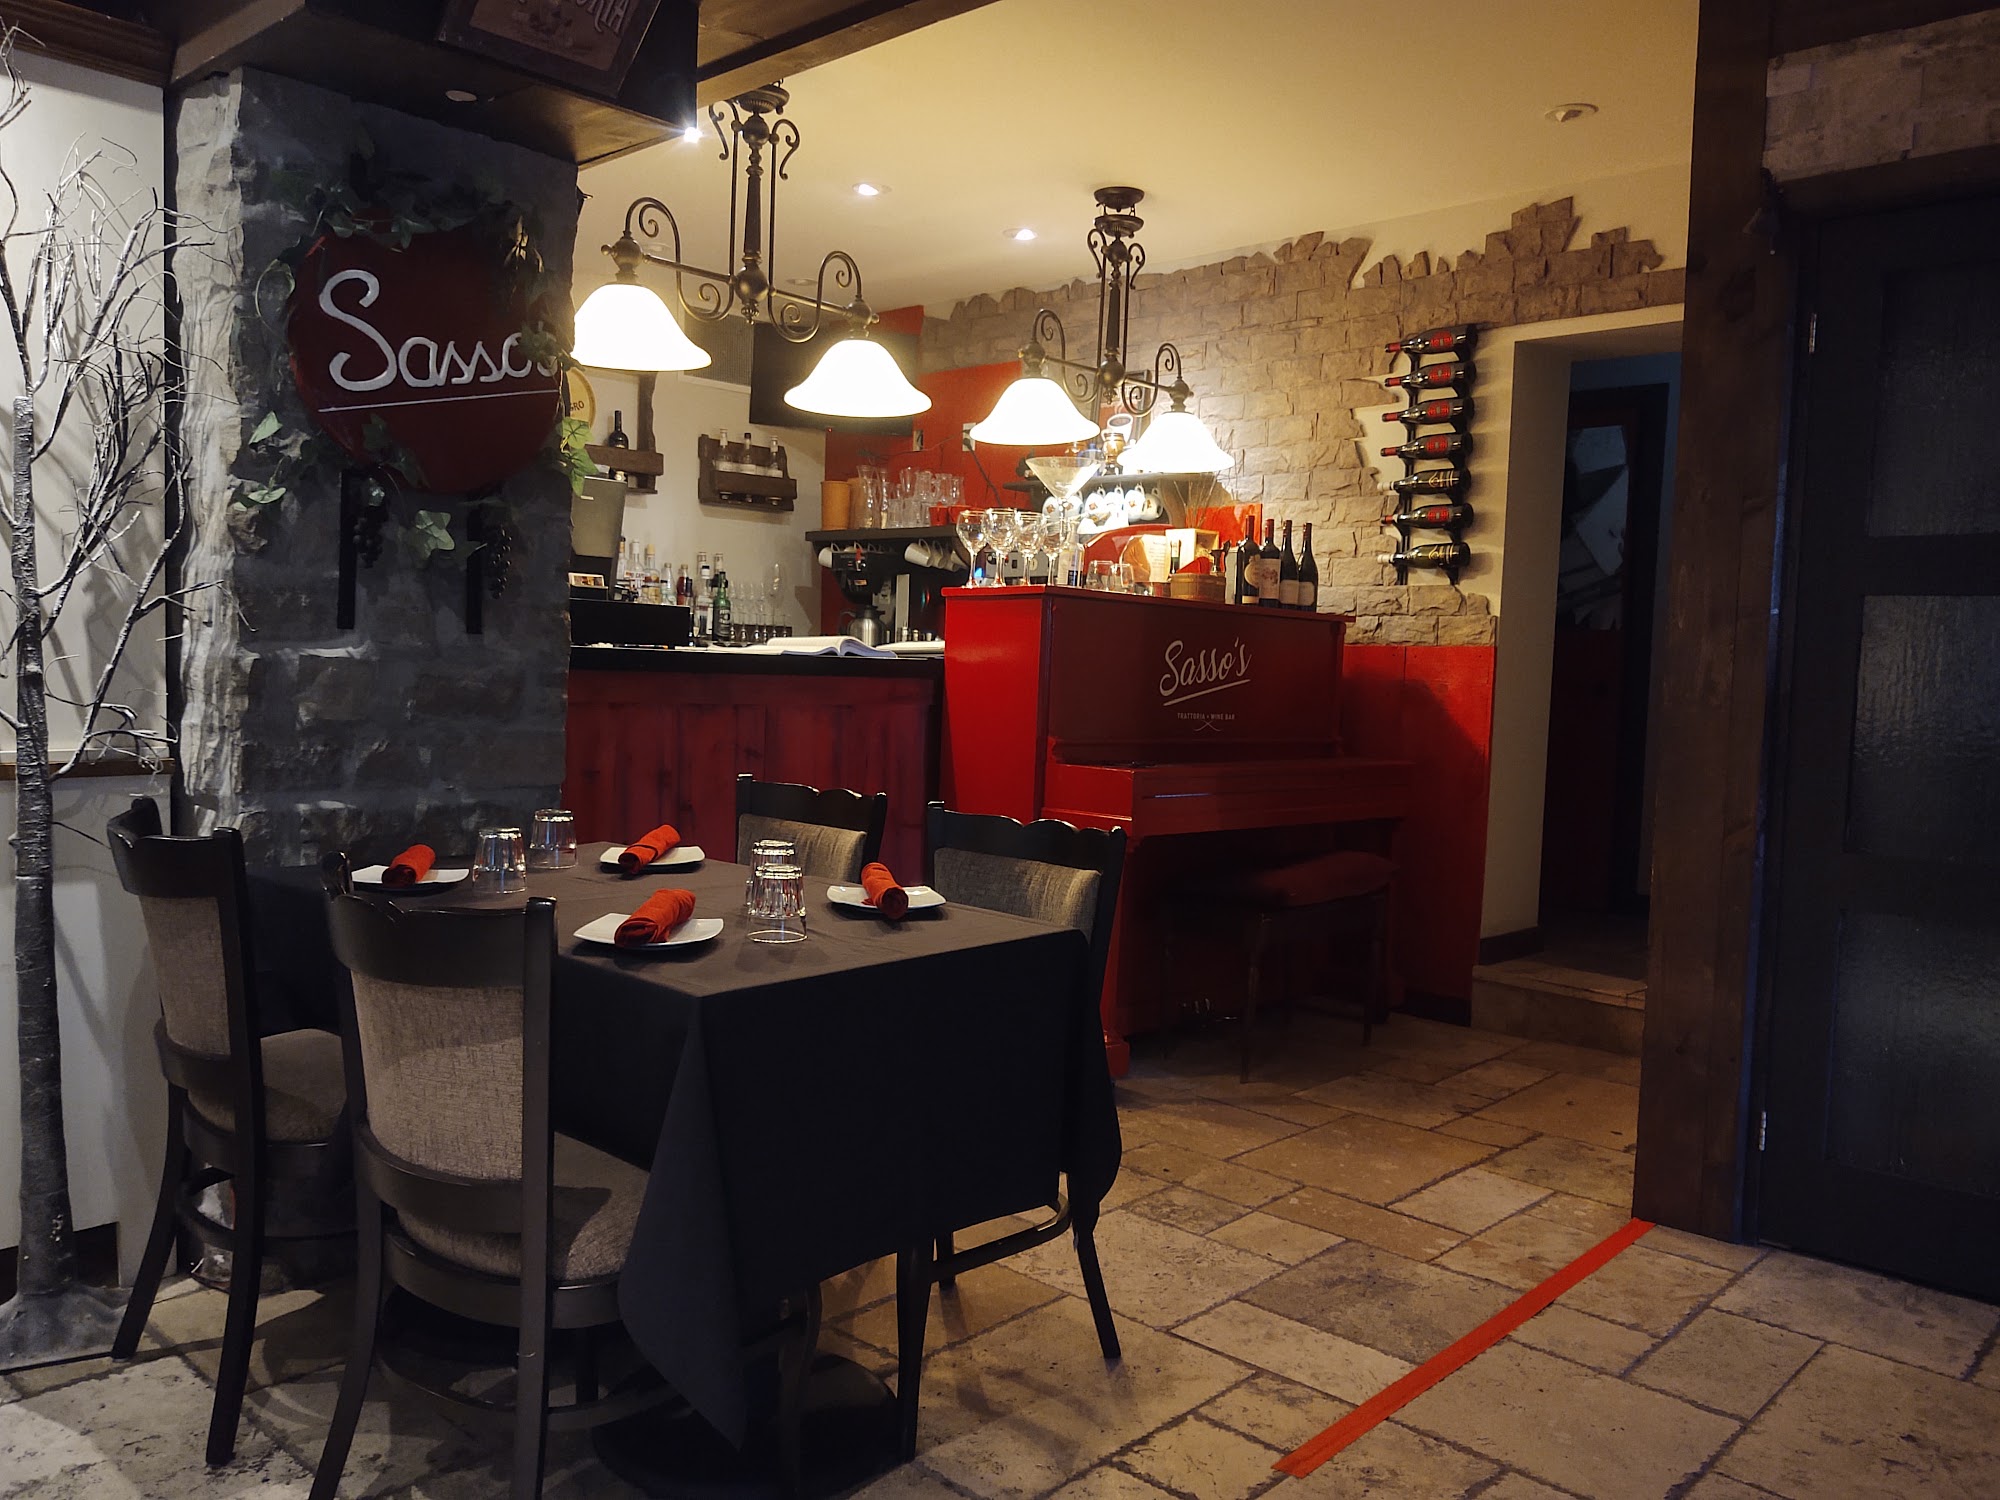 Sasso's Trattoria & Wine Bar